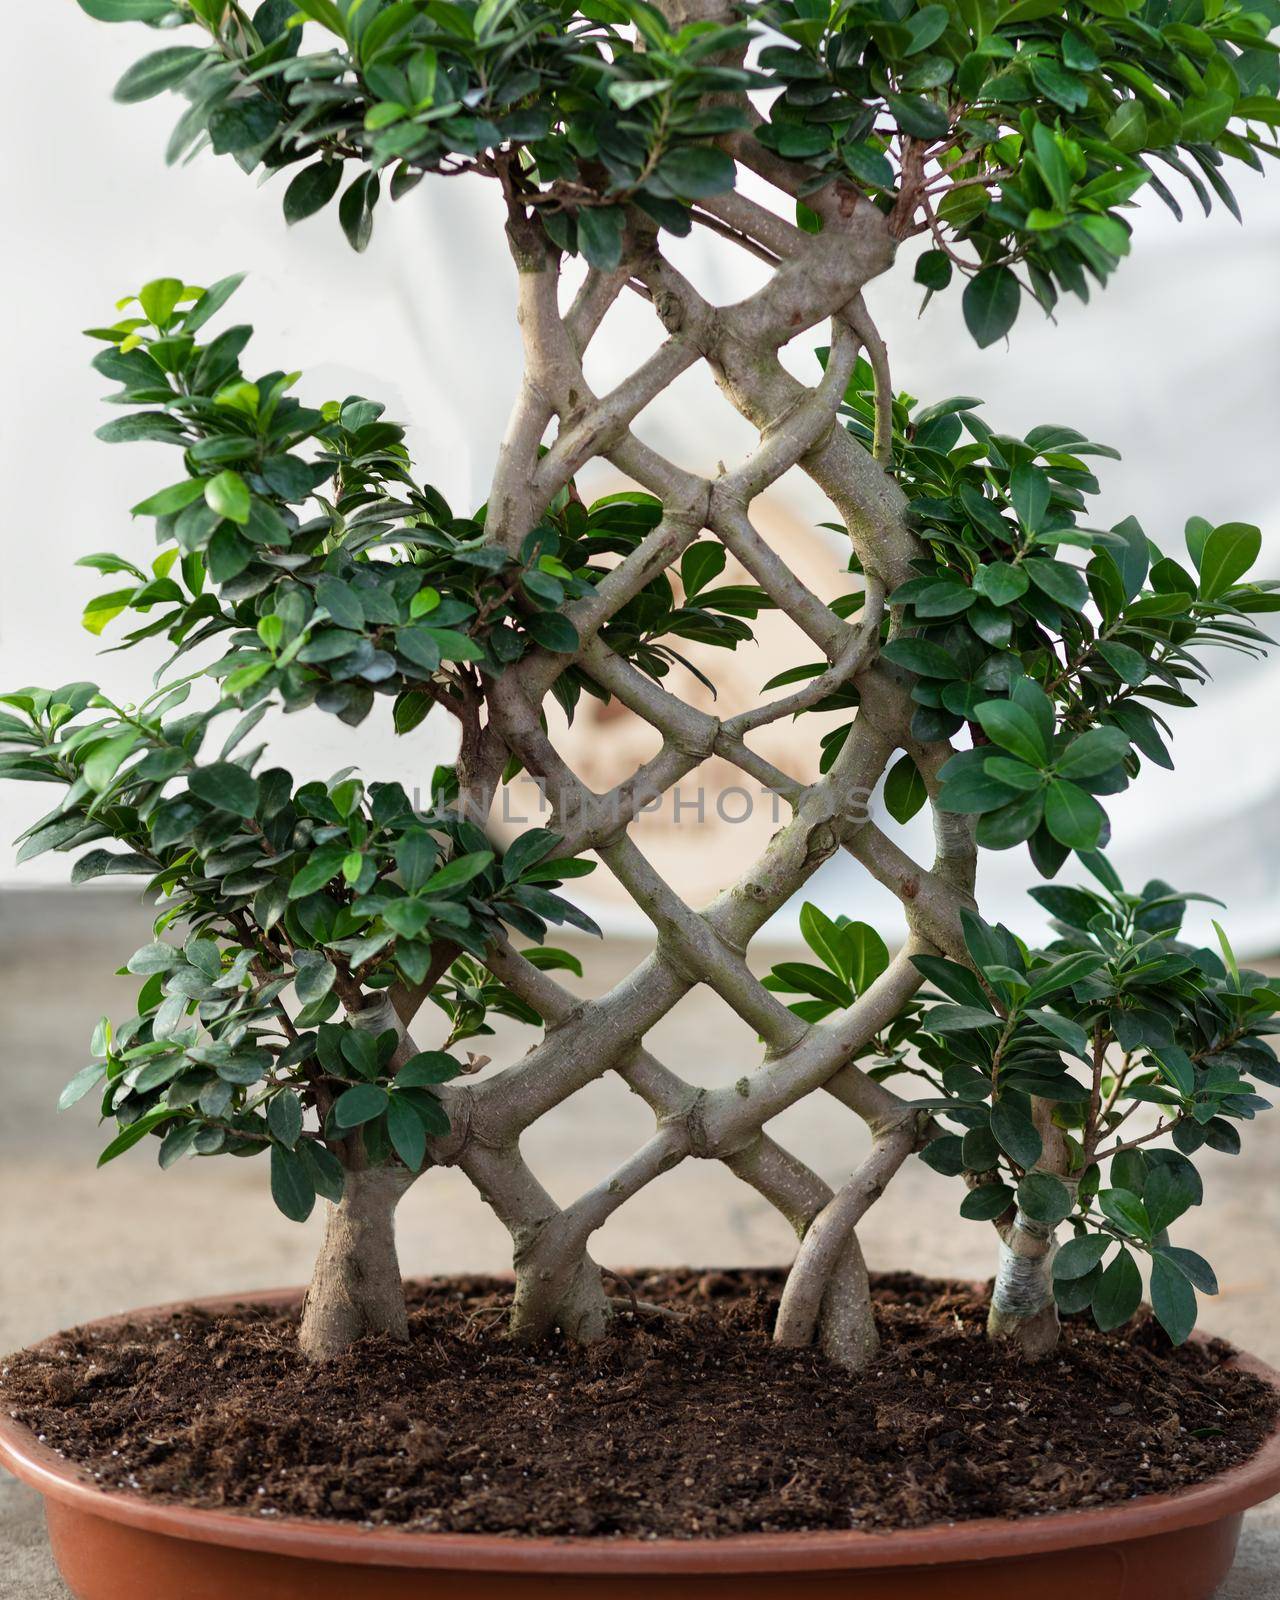 Big size Ficus bonsai ginseng retusa plant closely